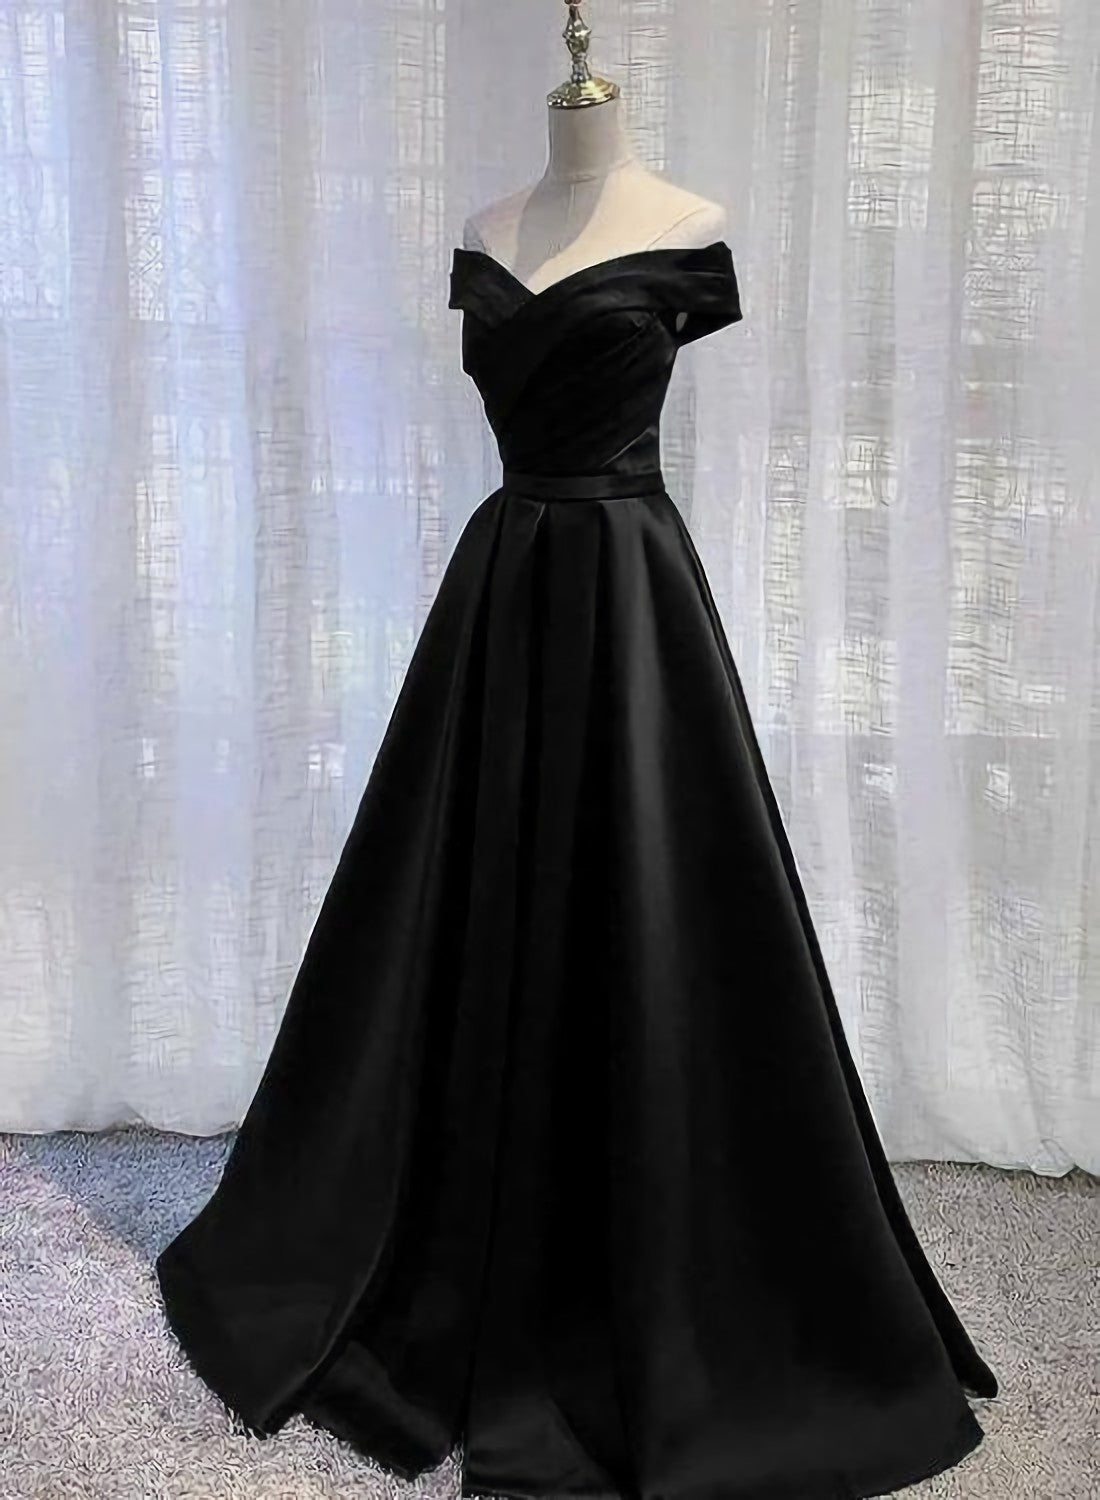 Party Dress New Look, Pretty Off Shoulder Black Satin A Line Party Dress, Formal Dress, Long Black Prom Dress